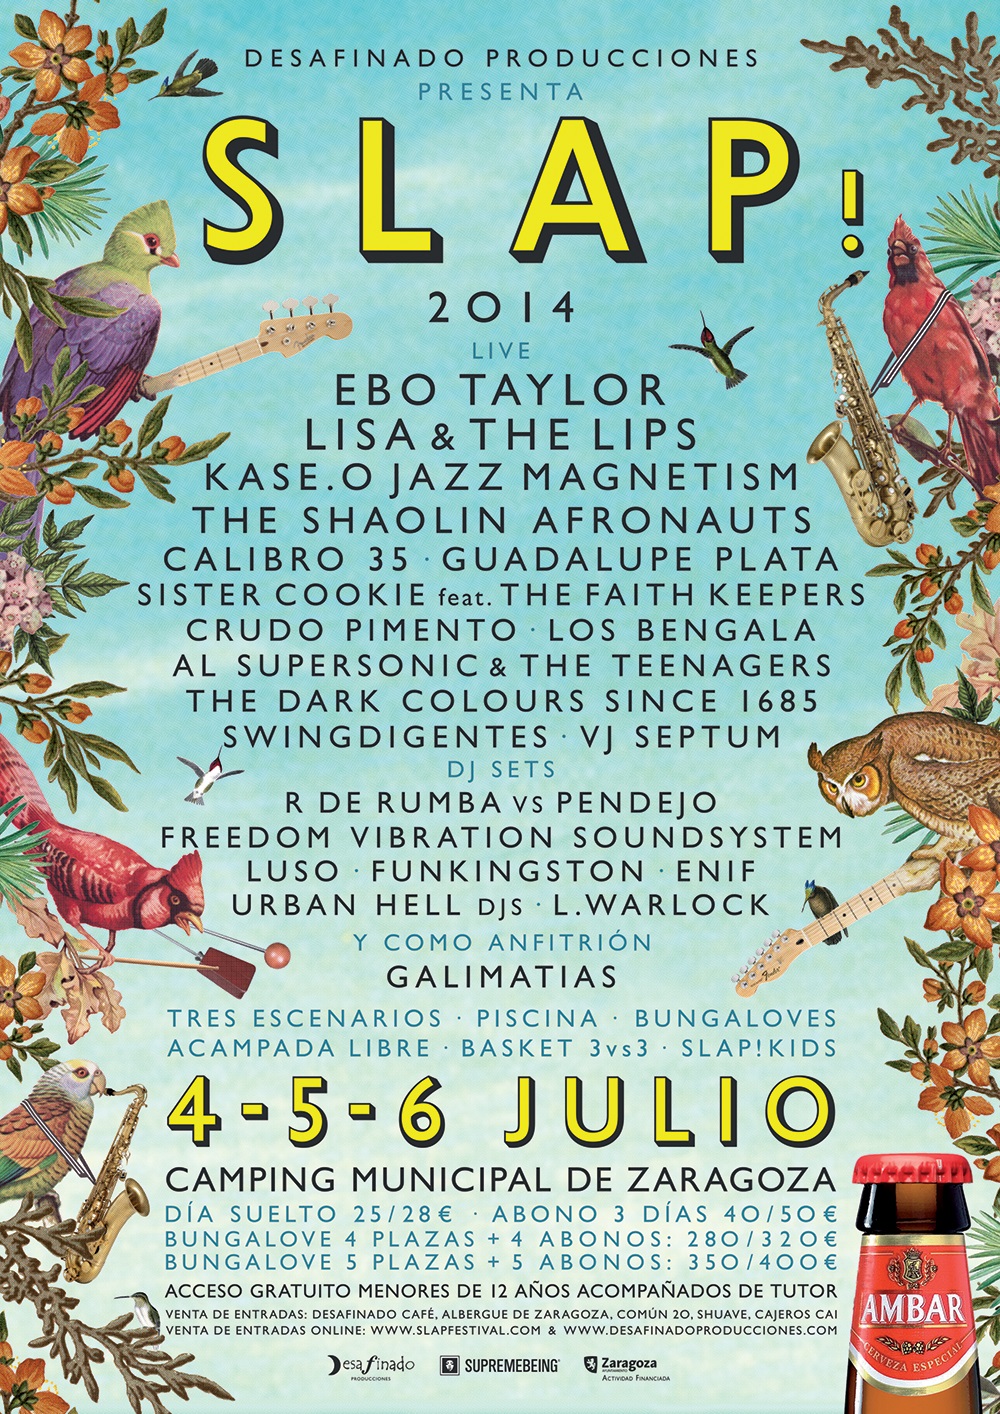 slap-festival-camping-zaragoza-julio-2014-desafinado-funk-hip-hop-soul-fiesta